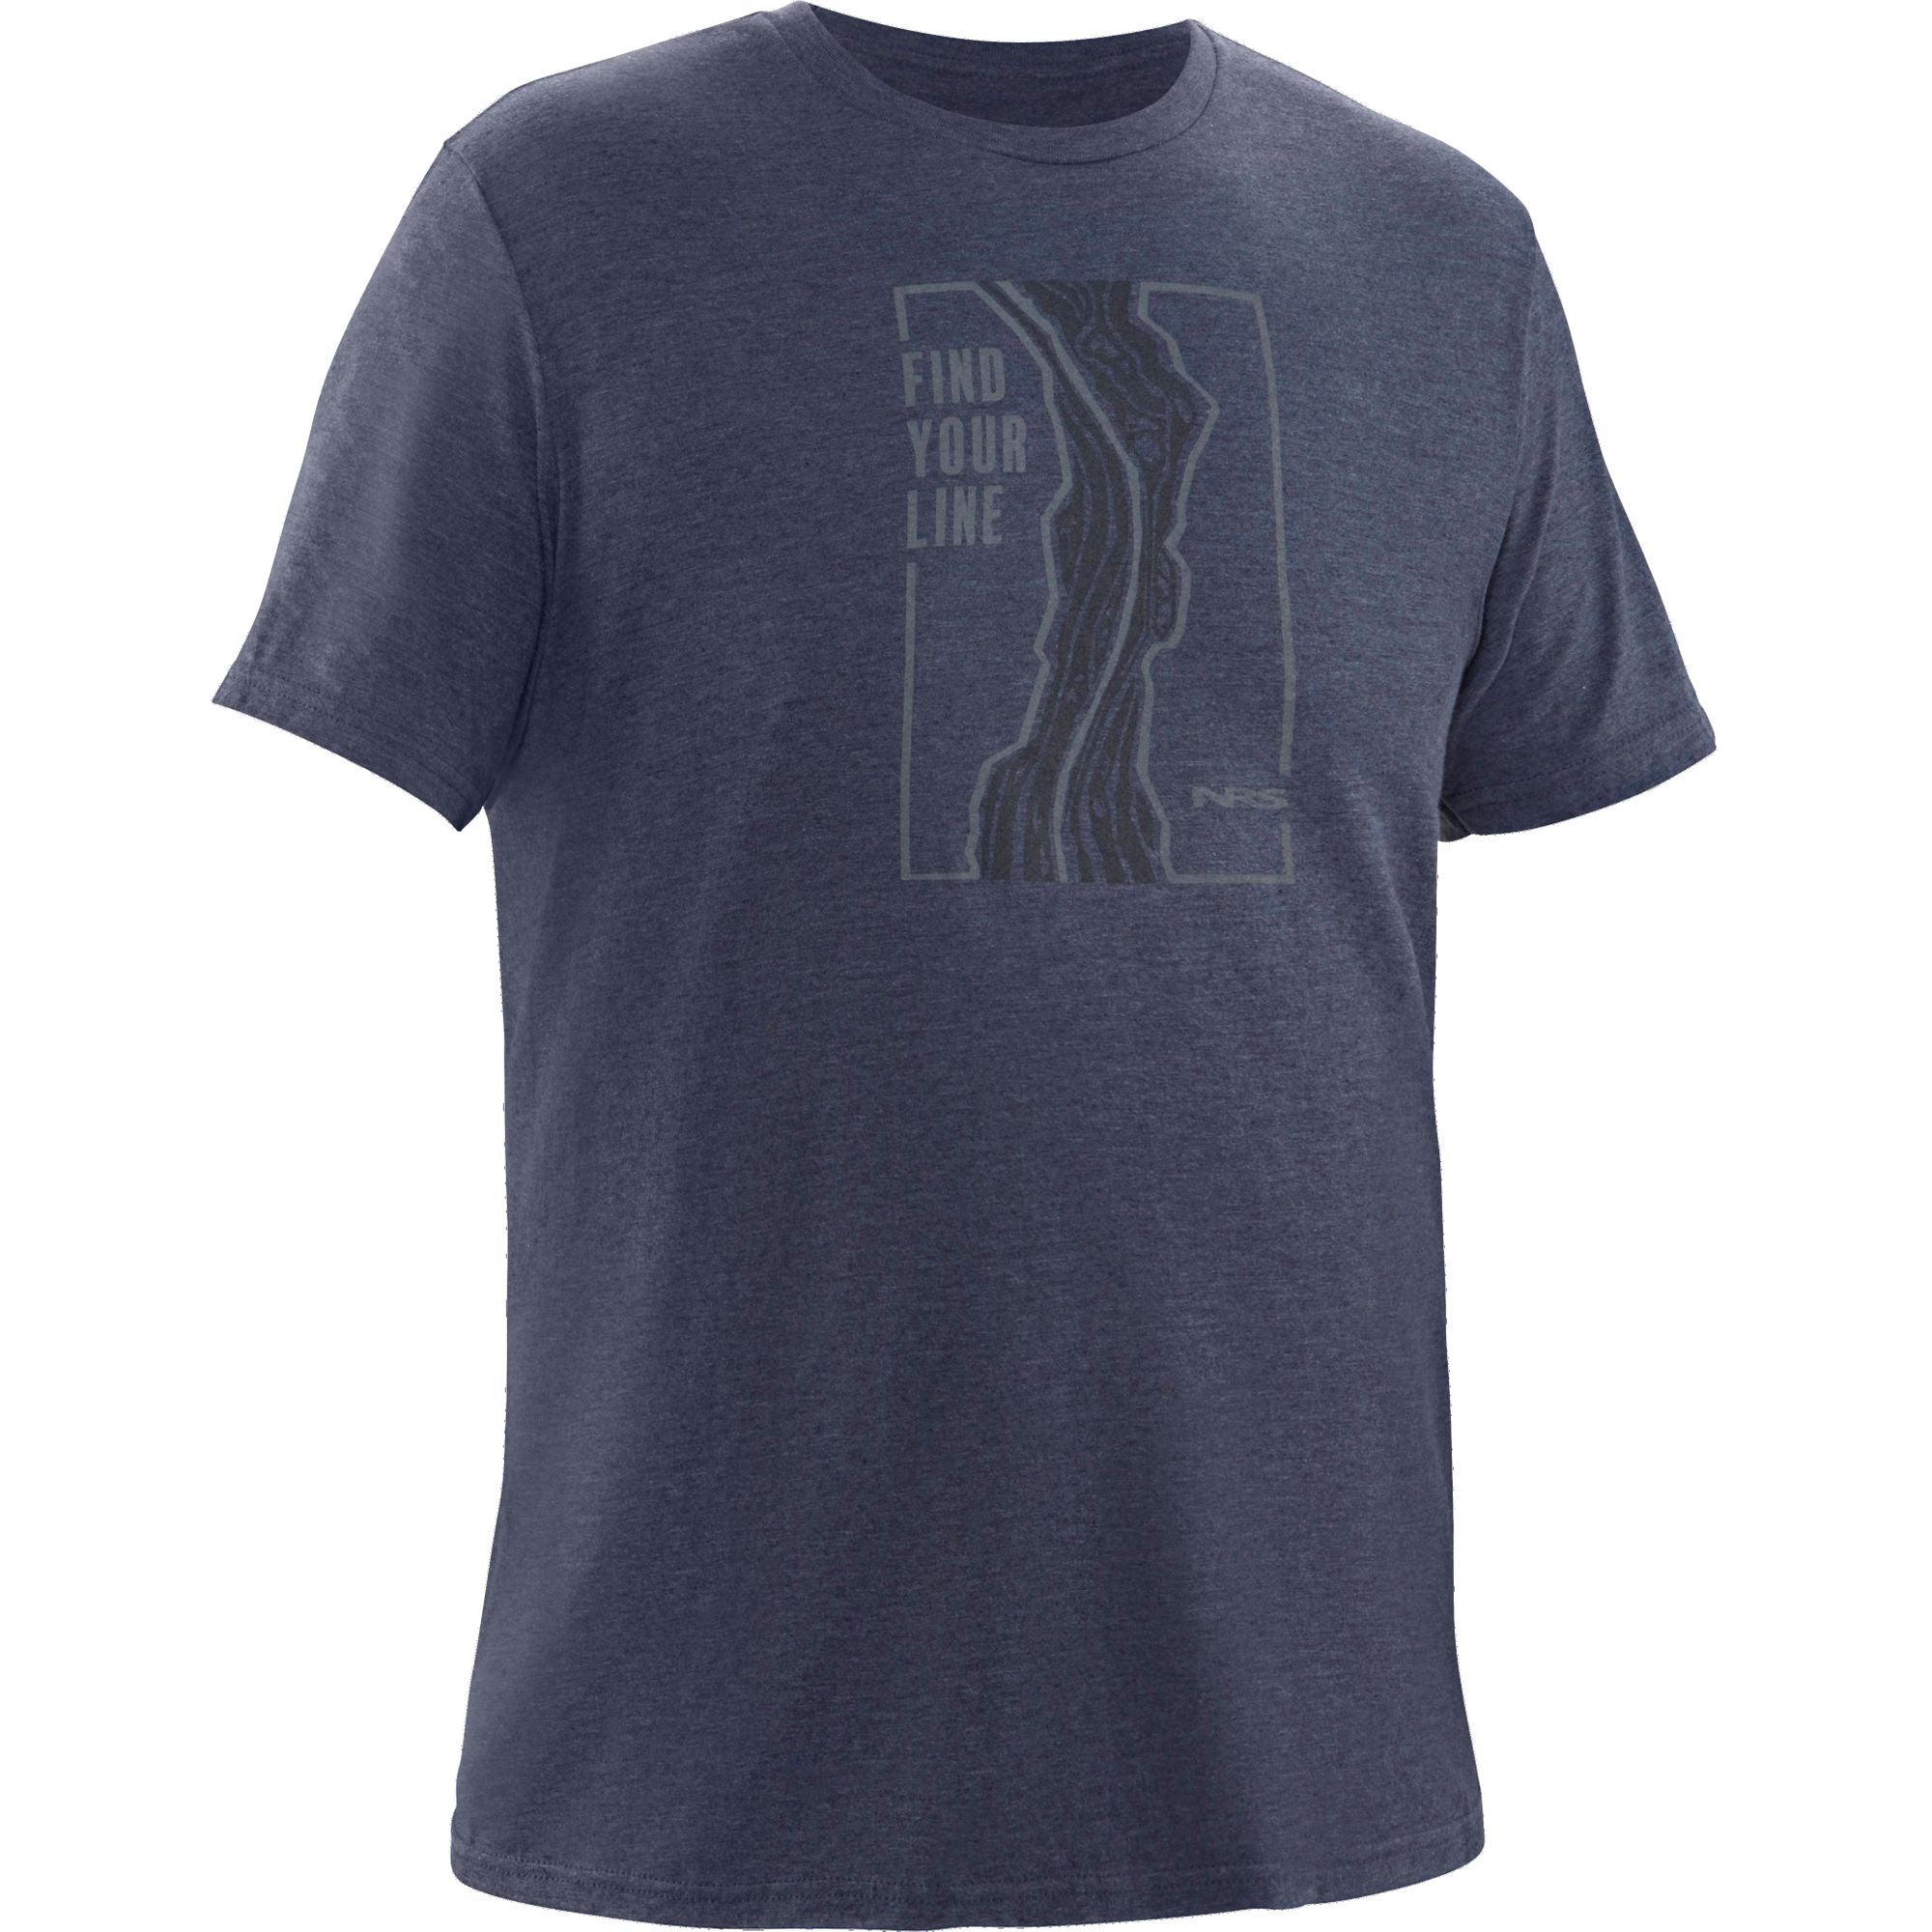 NRS - Men's Find Your Line T-Shirt